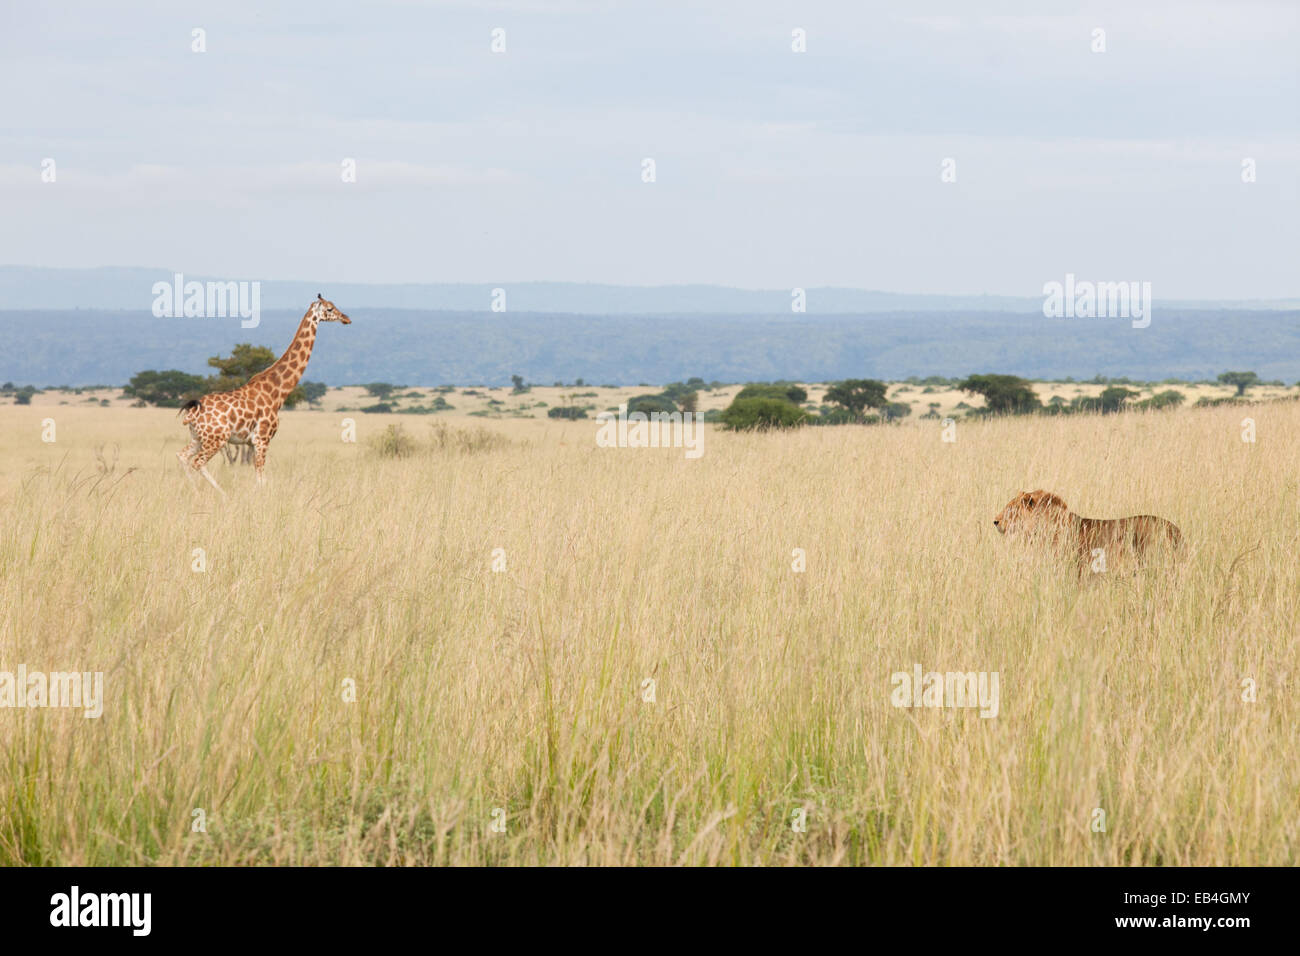 A giraffe and a lion in a vast savanna. Stock Photo